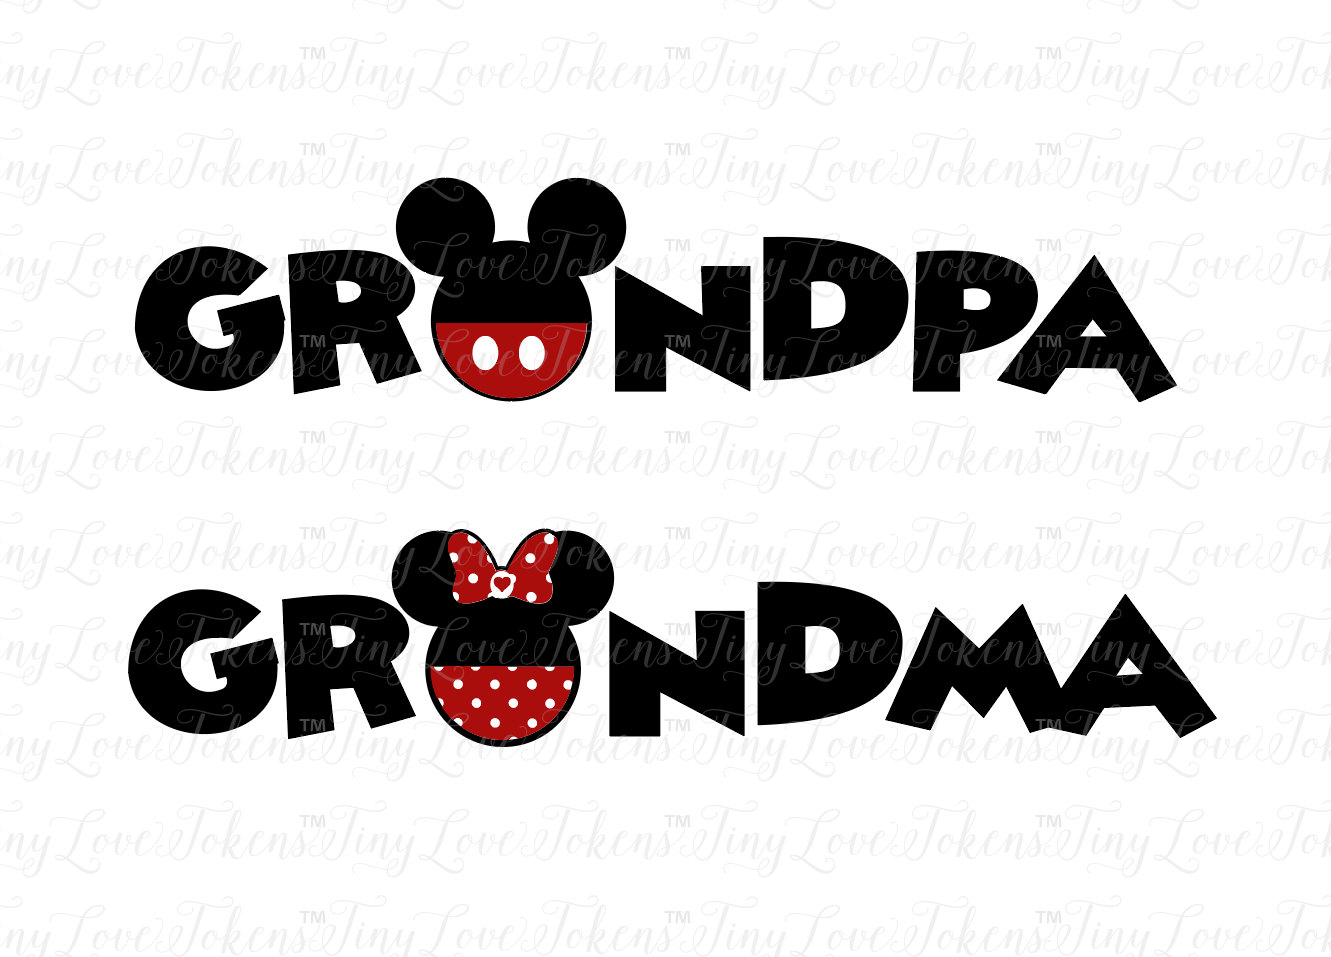 Free Free 204 Disney Grandma Svg SVG PNG EPS DXF File